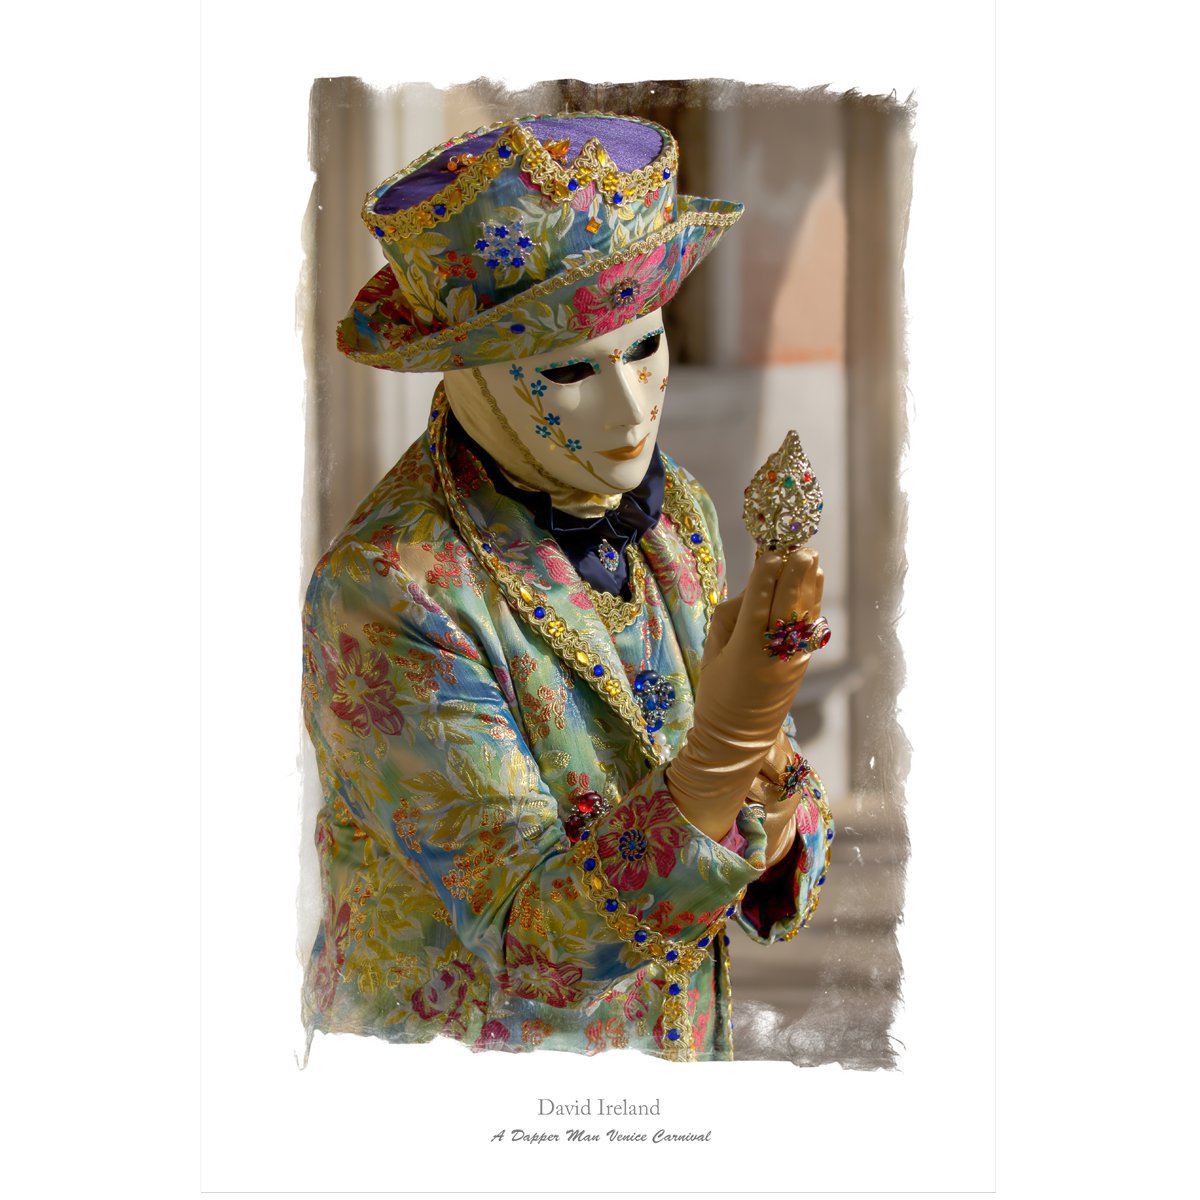 A Dapper Man Venice Carnival by David Ireland